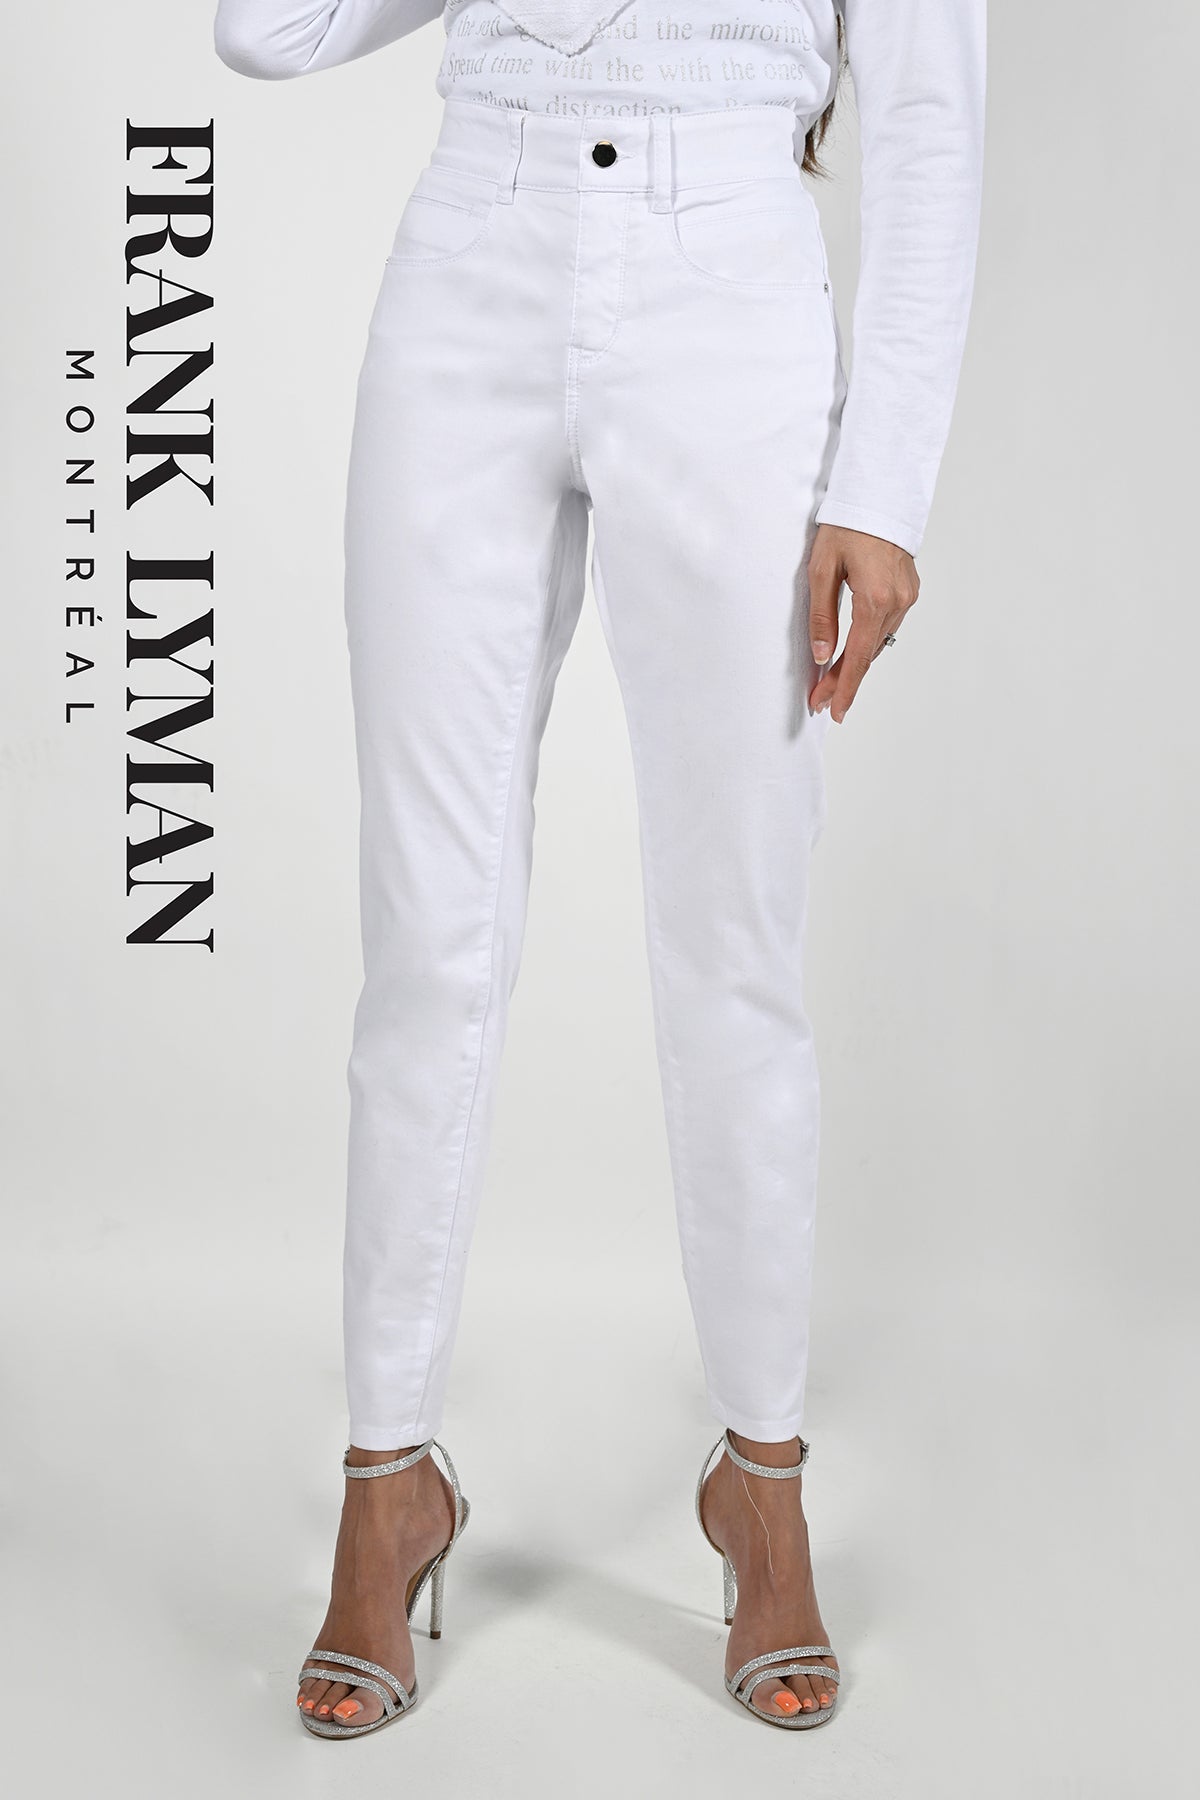 Frank Lyman Montreal White Jeans-Frank Lyman Montreal Tummy Control Jeans-Buy Frank Lyman Montreal White Jeans Online